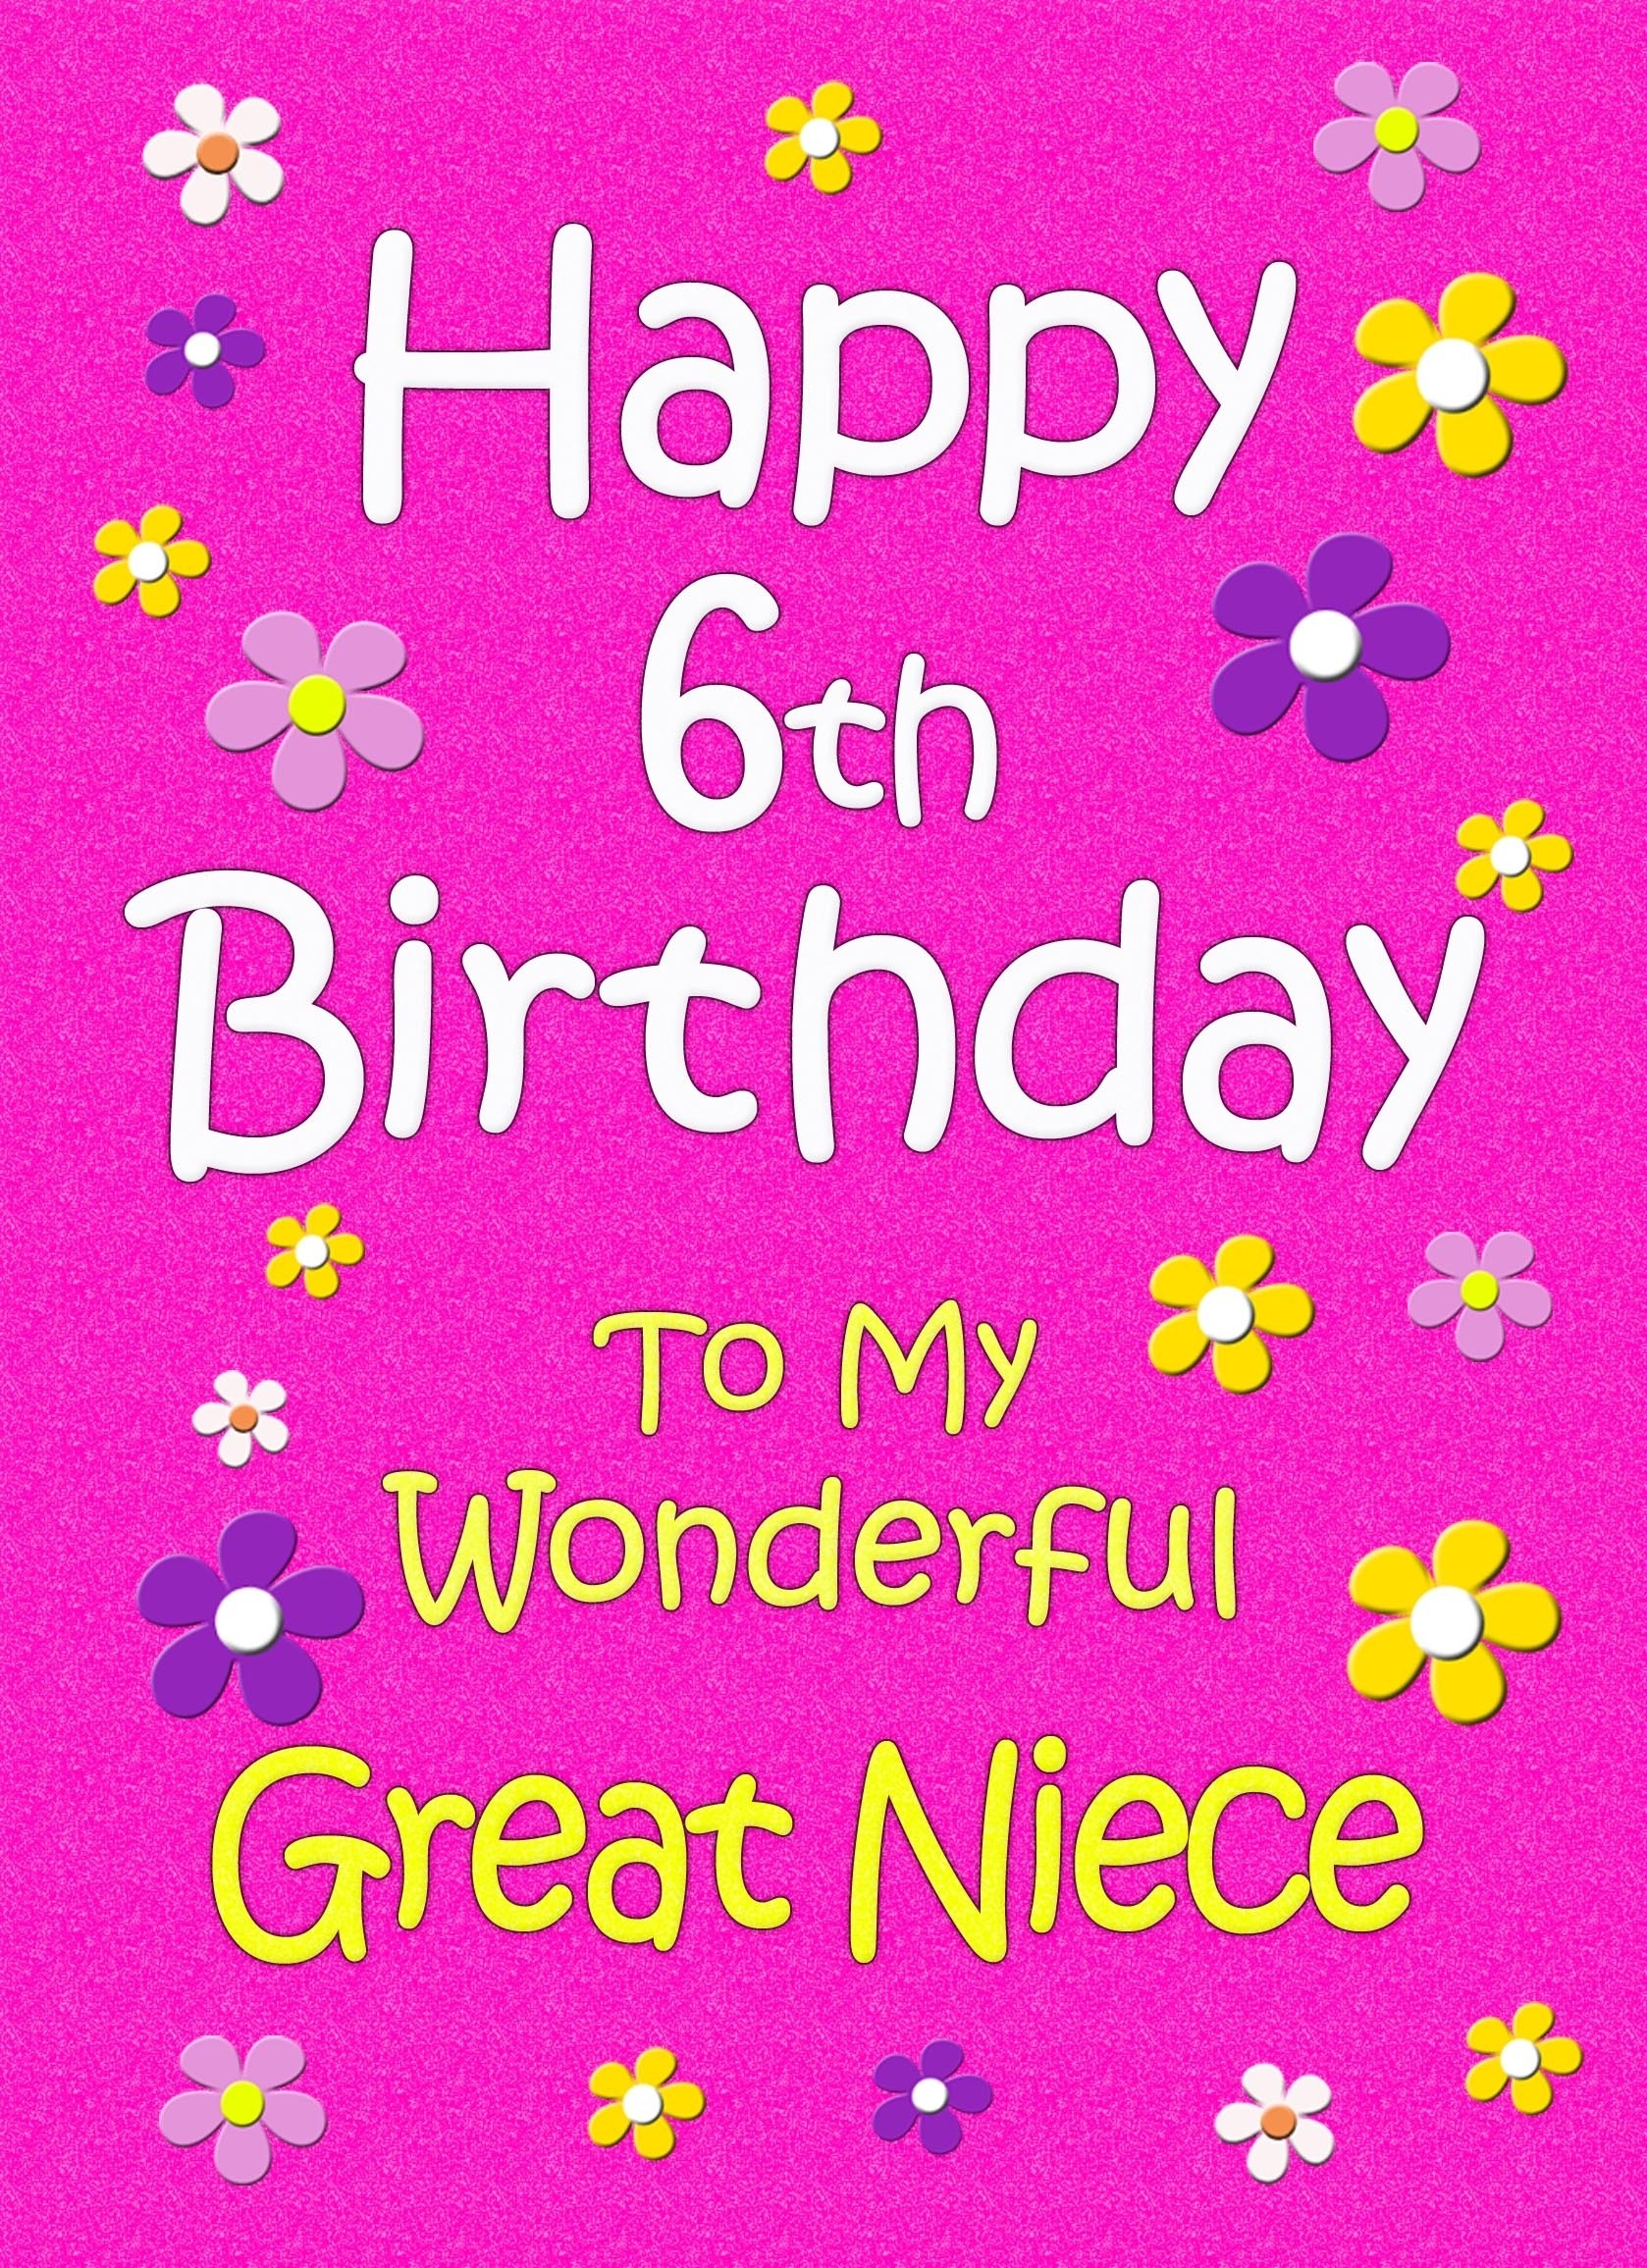 Great Niece 6th Birthday Card (Pink)